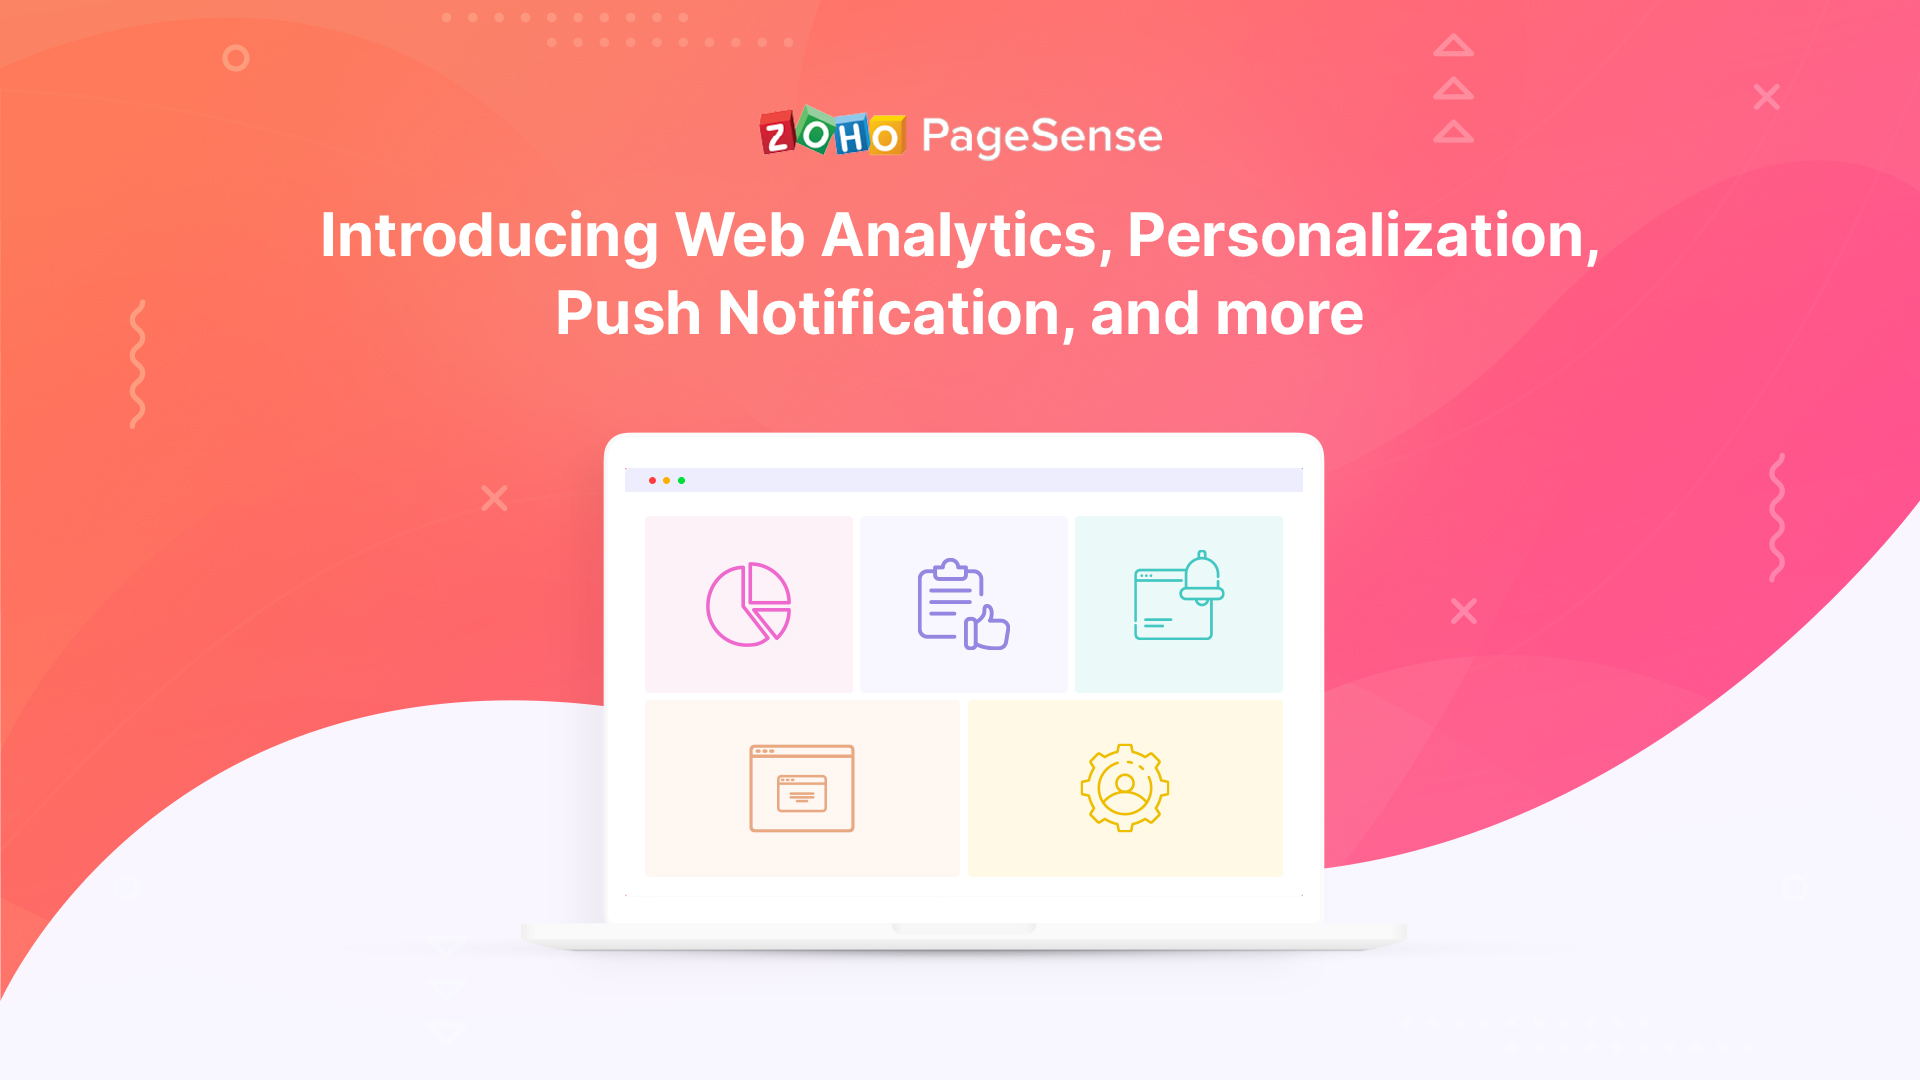 PageSense: Introducing Web Analytics, Personalization, Push Notification, and more